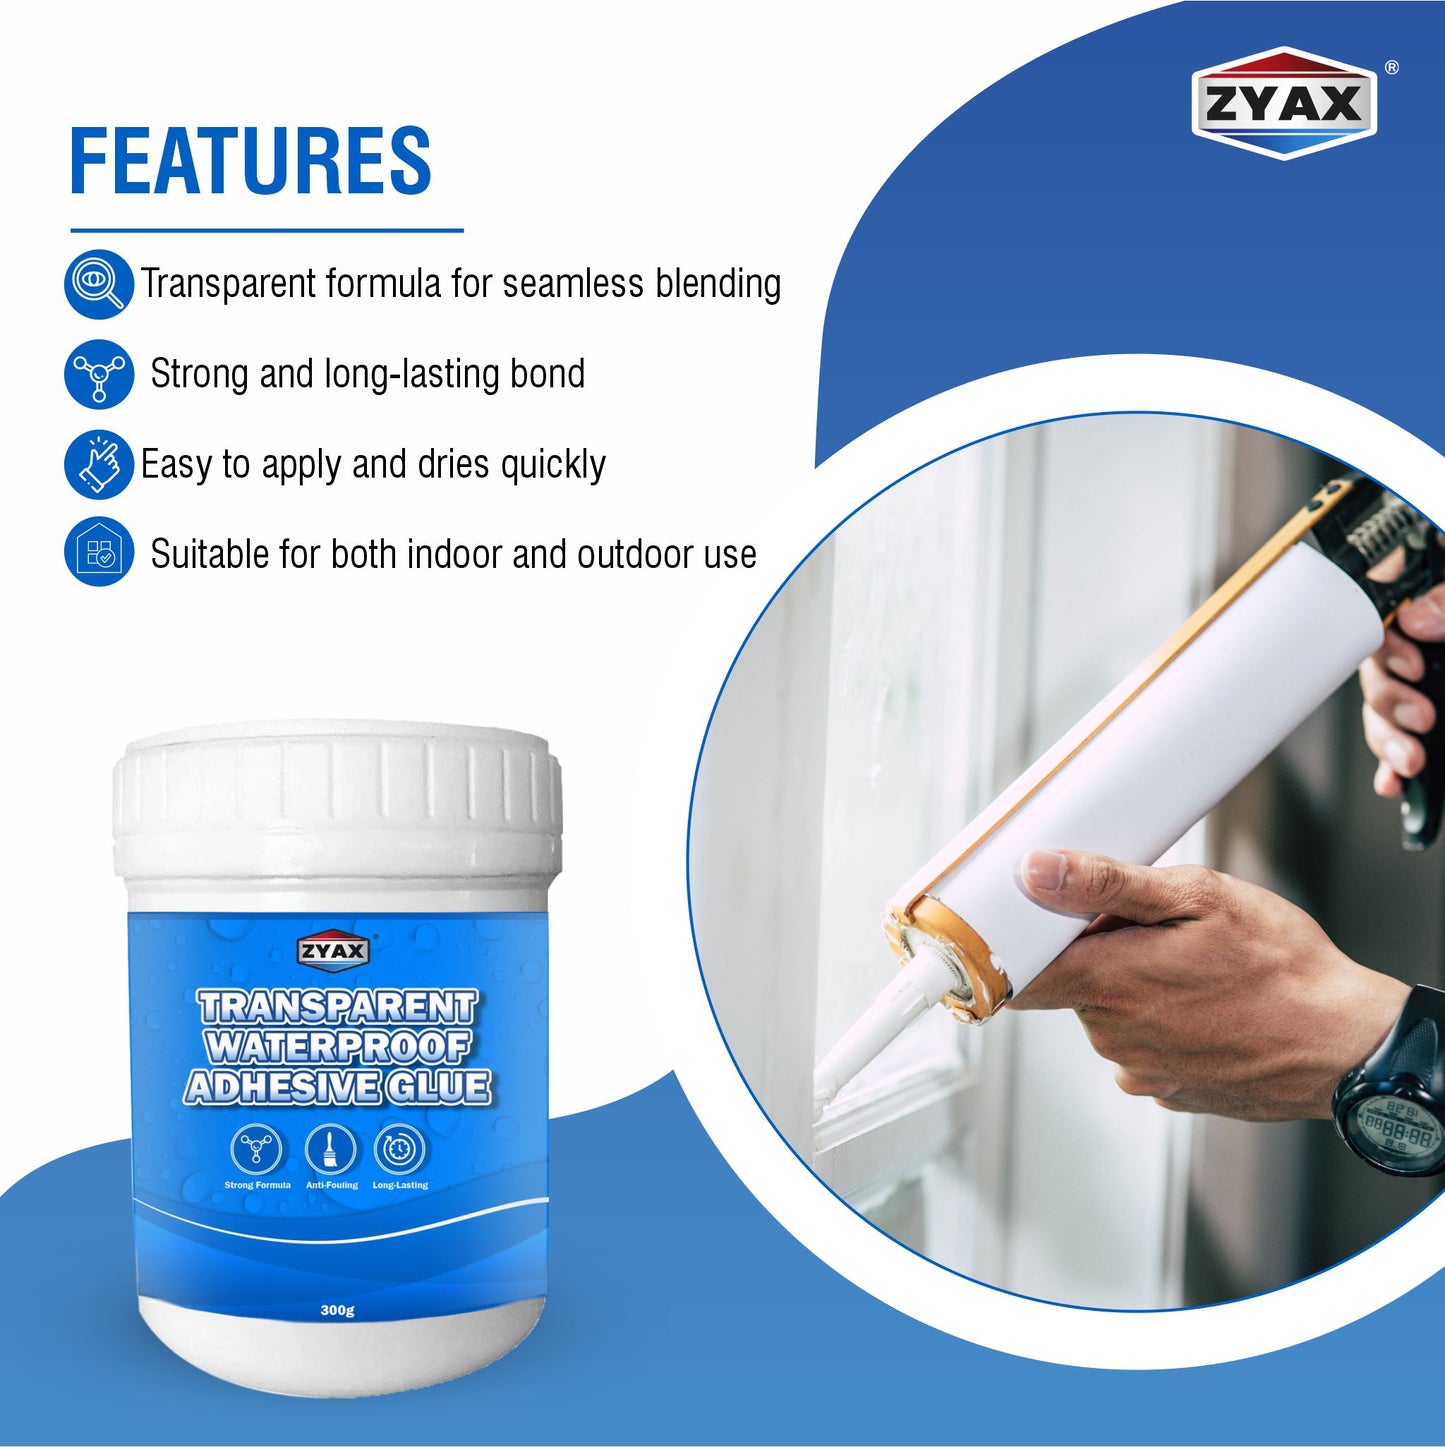 Zyax Transparent Waterproof Adhesive Glue